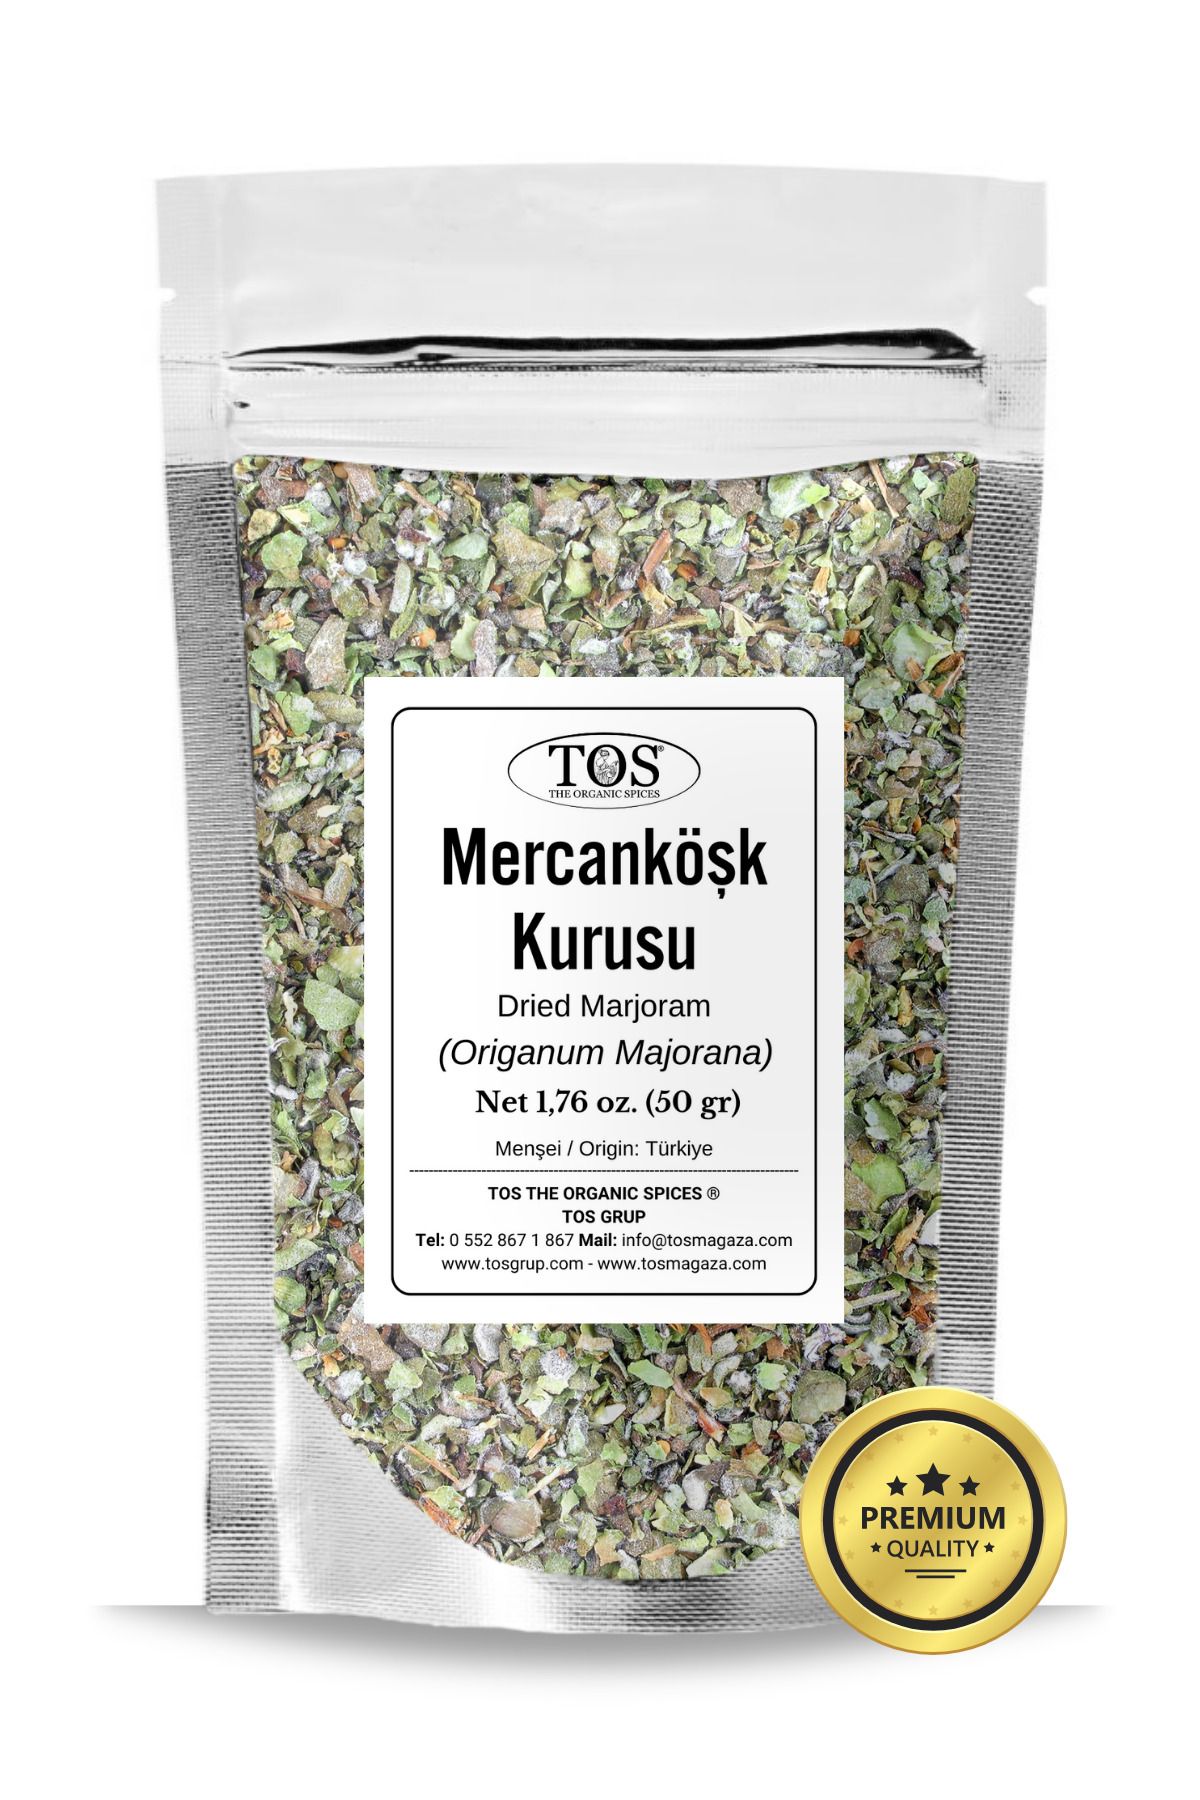 TOS The Organic Spices Mercanköşk 50 gr (1. KALİTE) Origanum Majorana